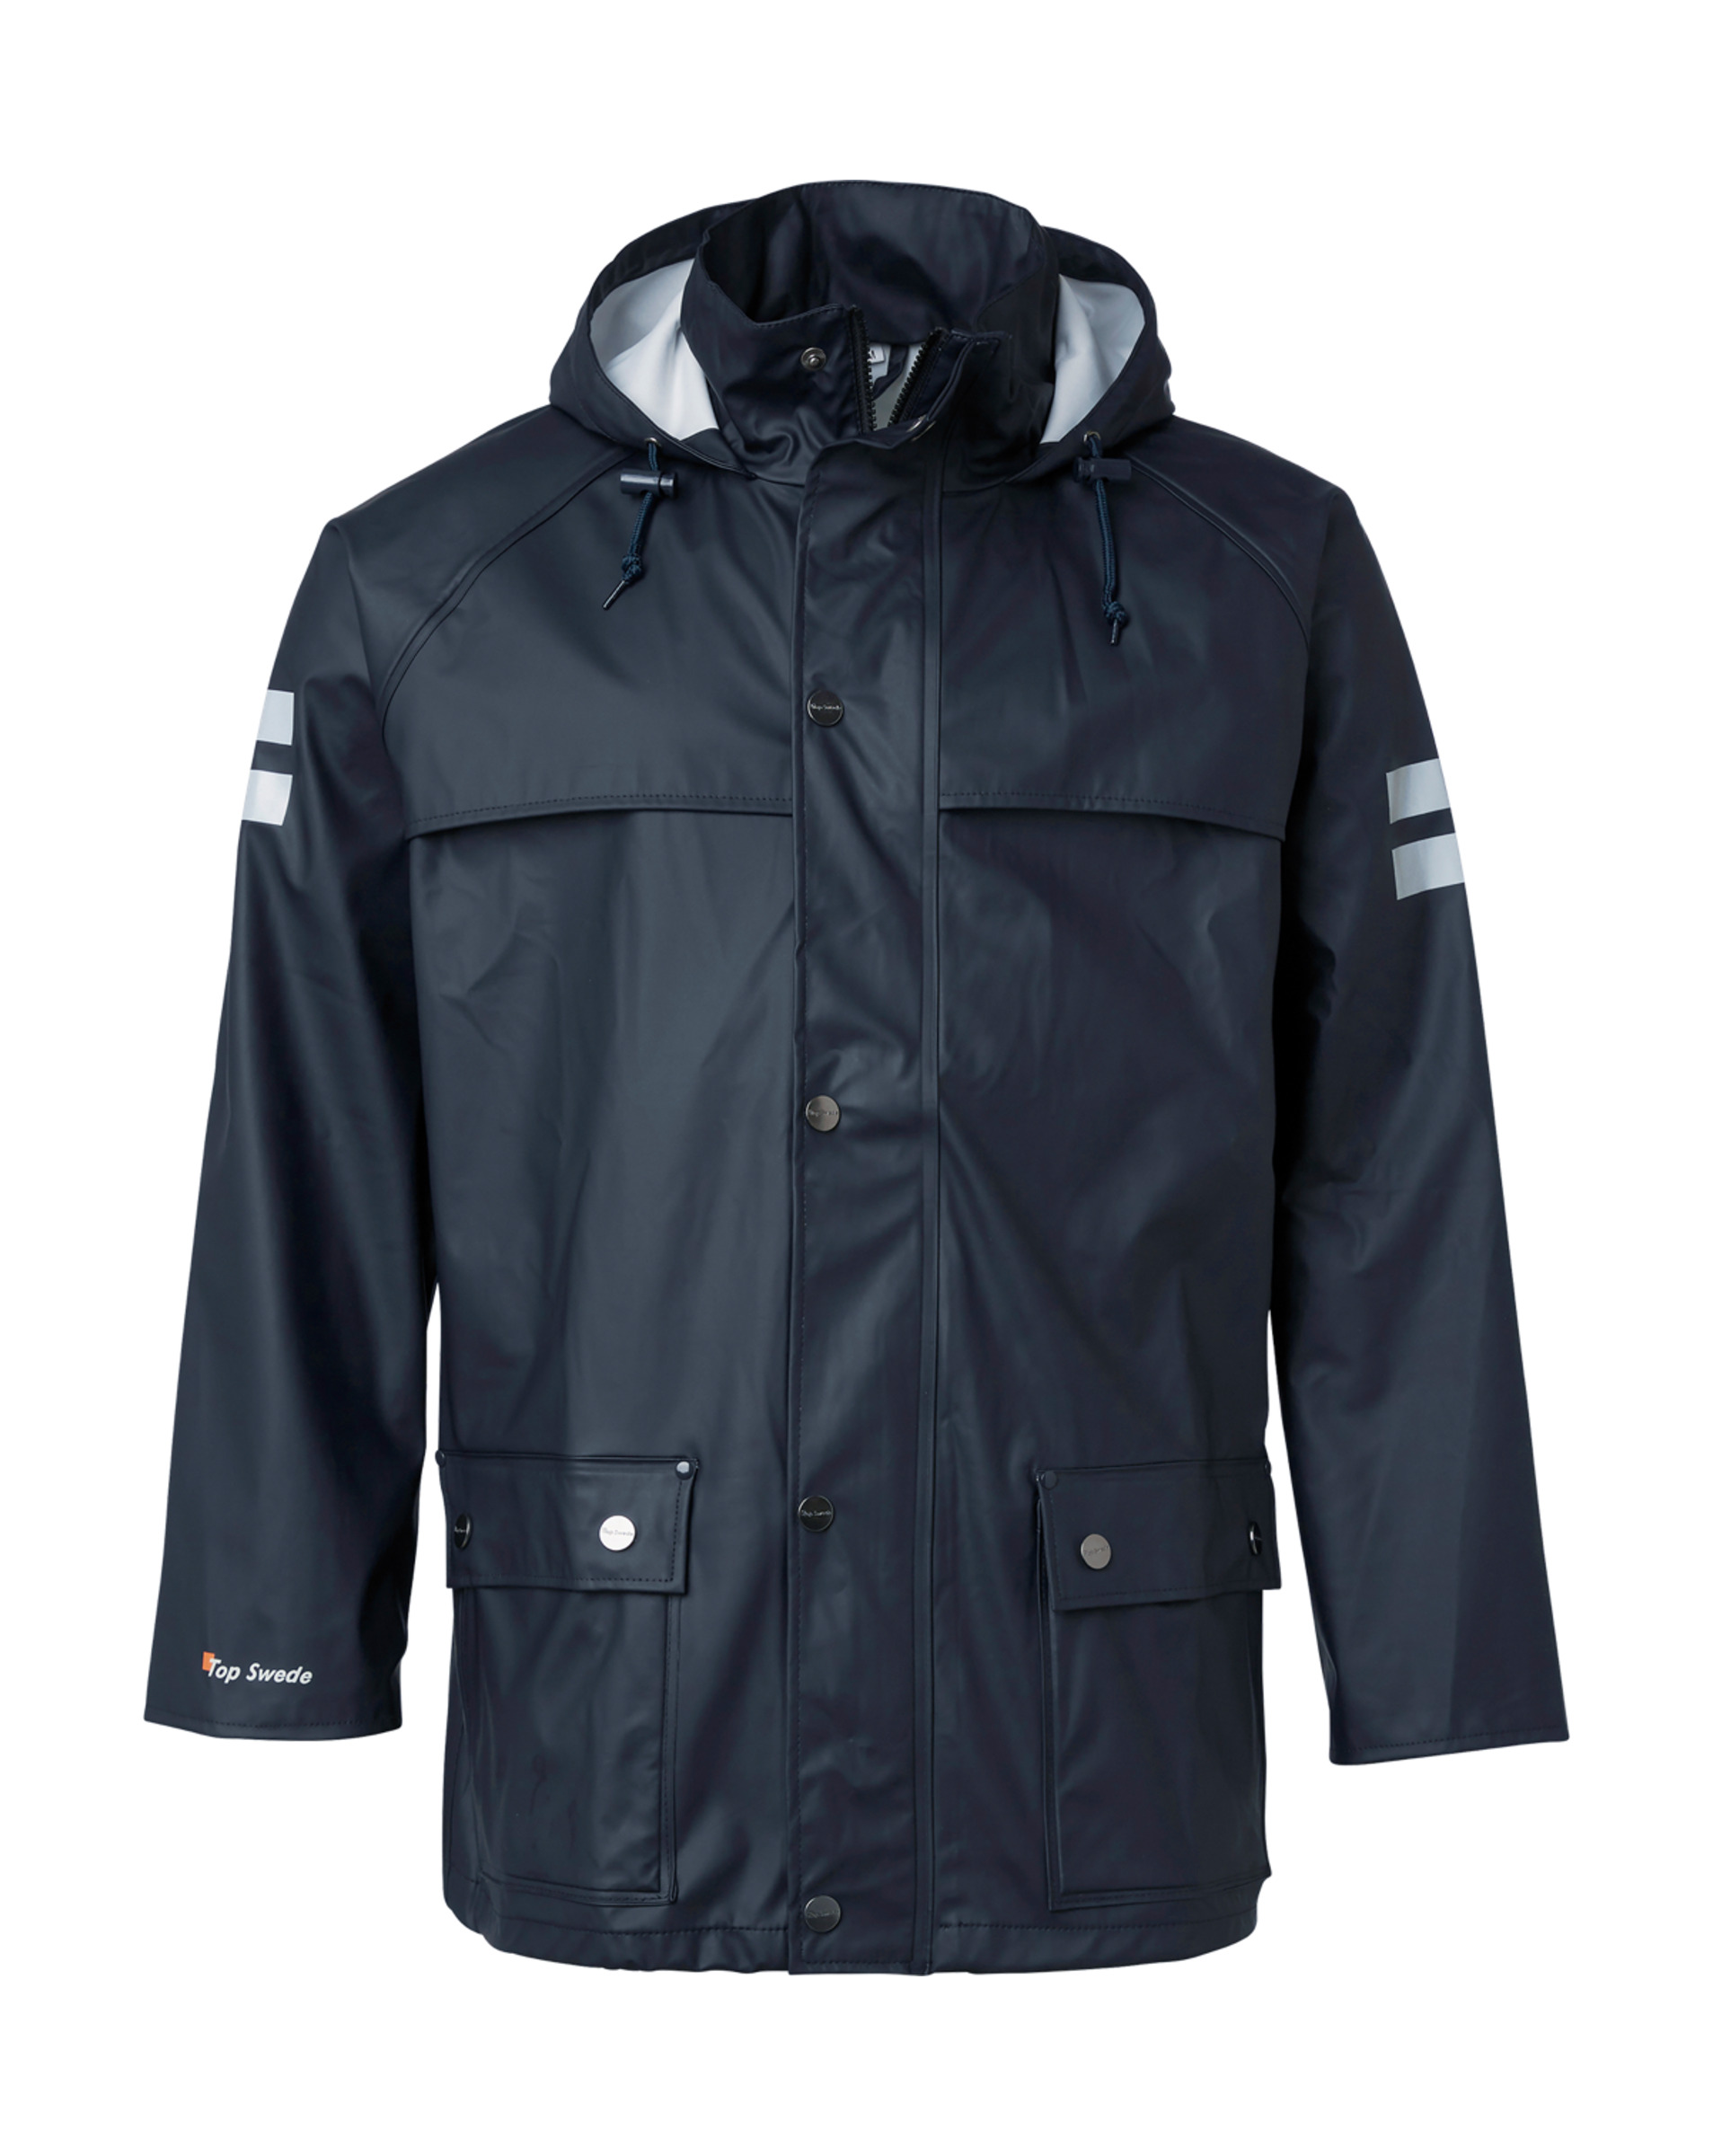 Top Swede 9195 Rain Jacket